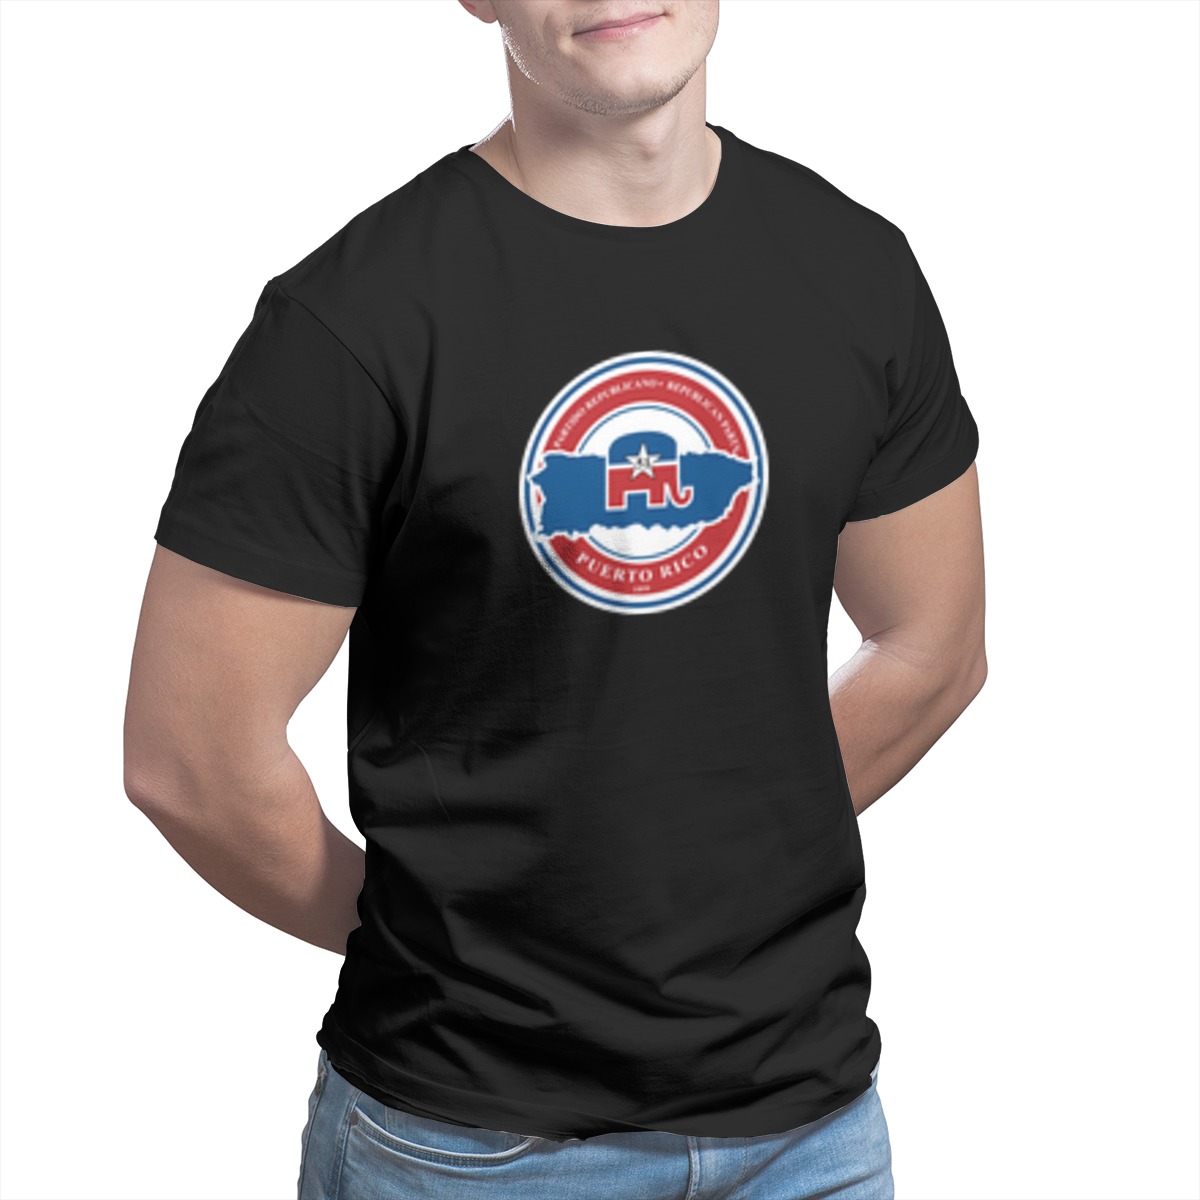 Harris funny Men's T Shirt Novelty Tops Bitumen Bike Life Tees Clothes Cotton Printed T-Shirt Plus Size T-shirt 3291